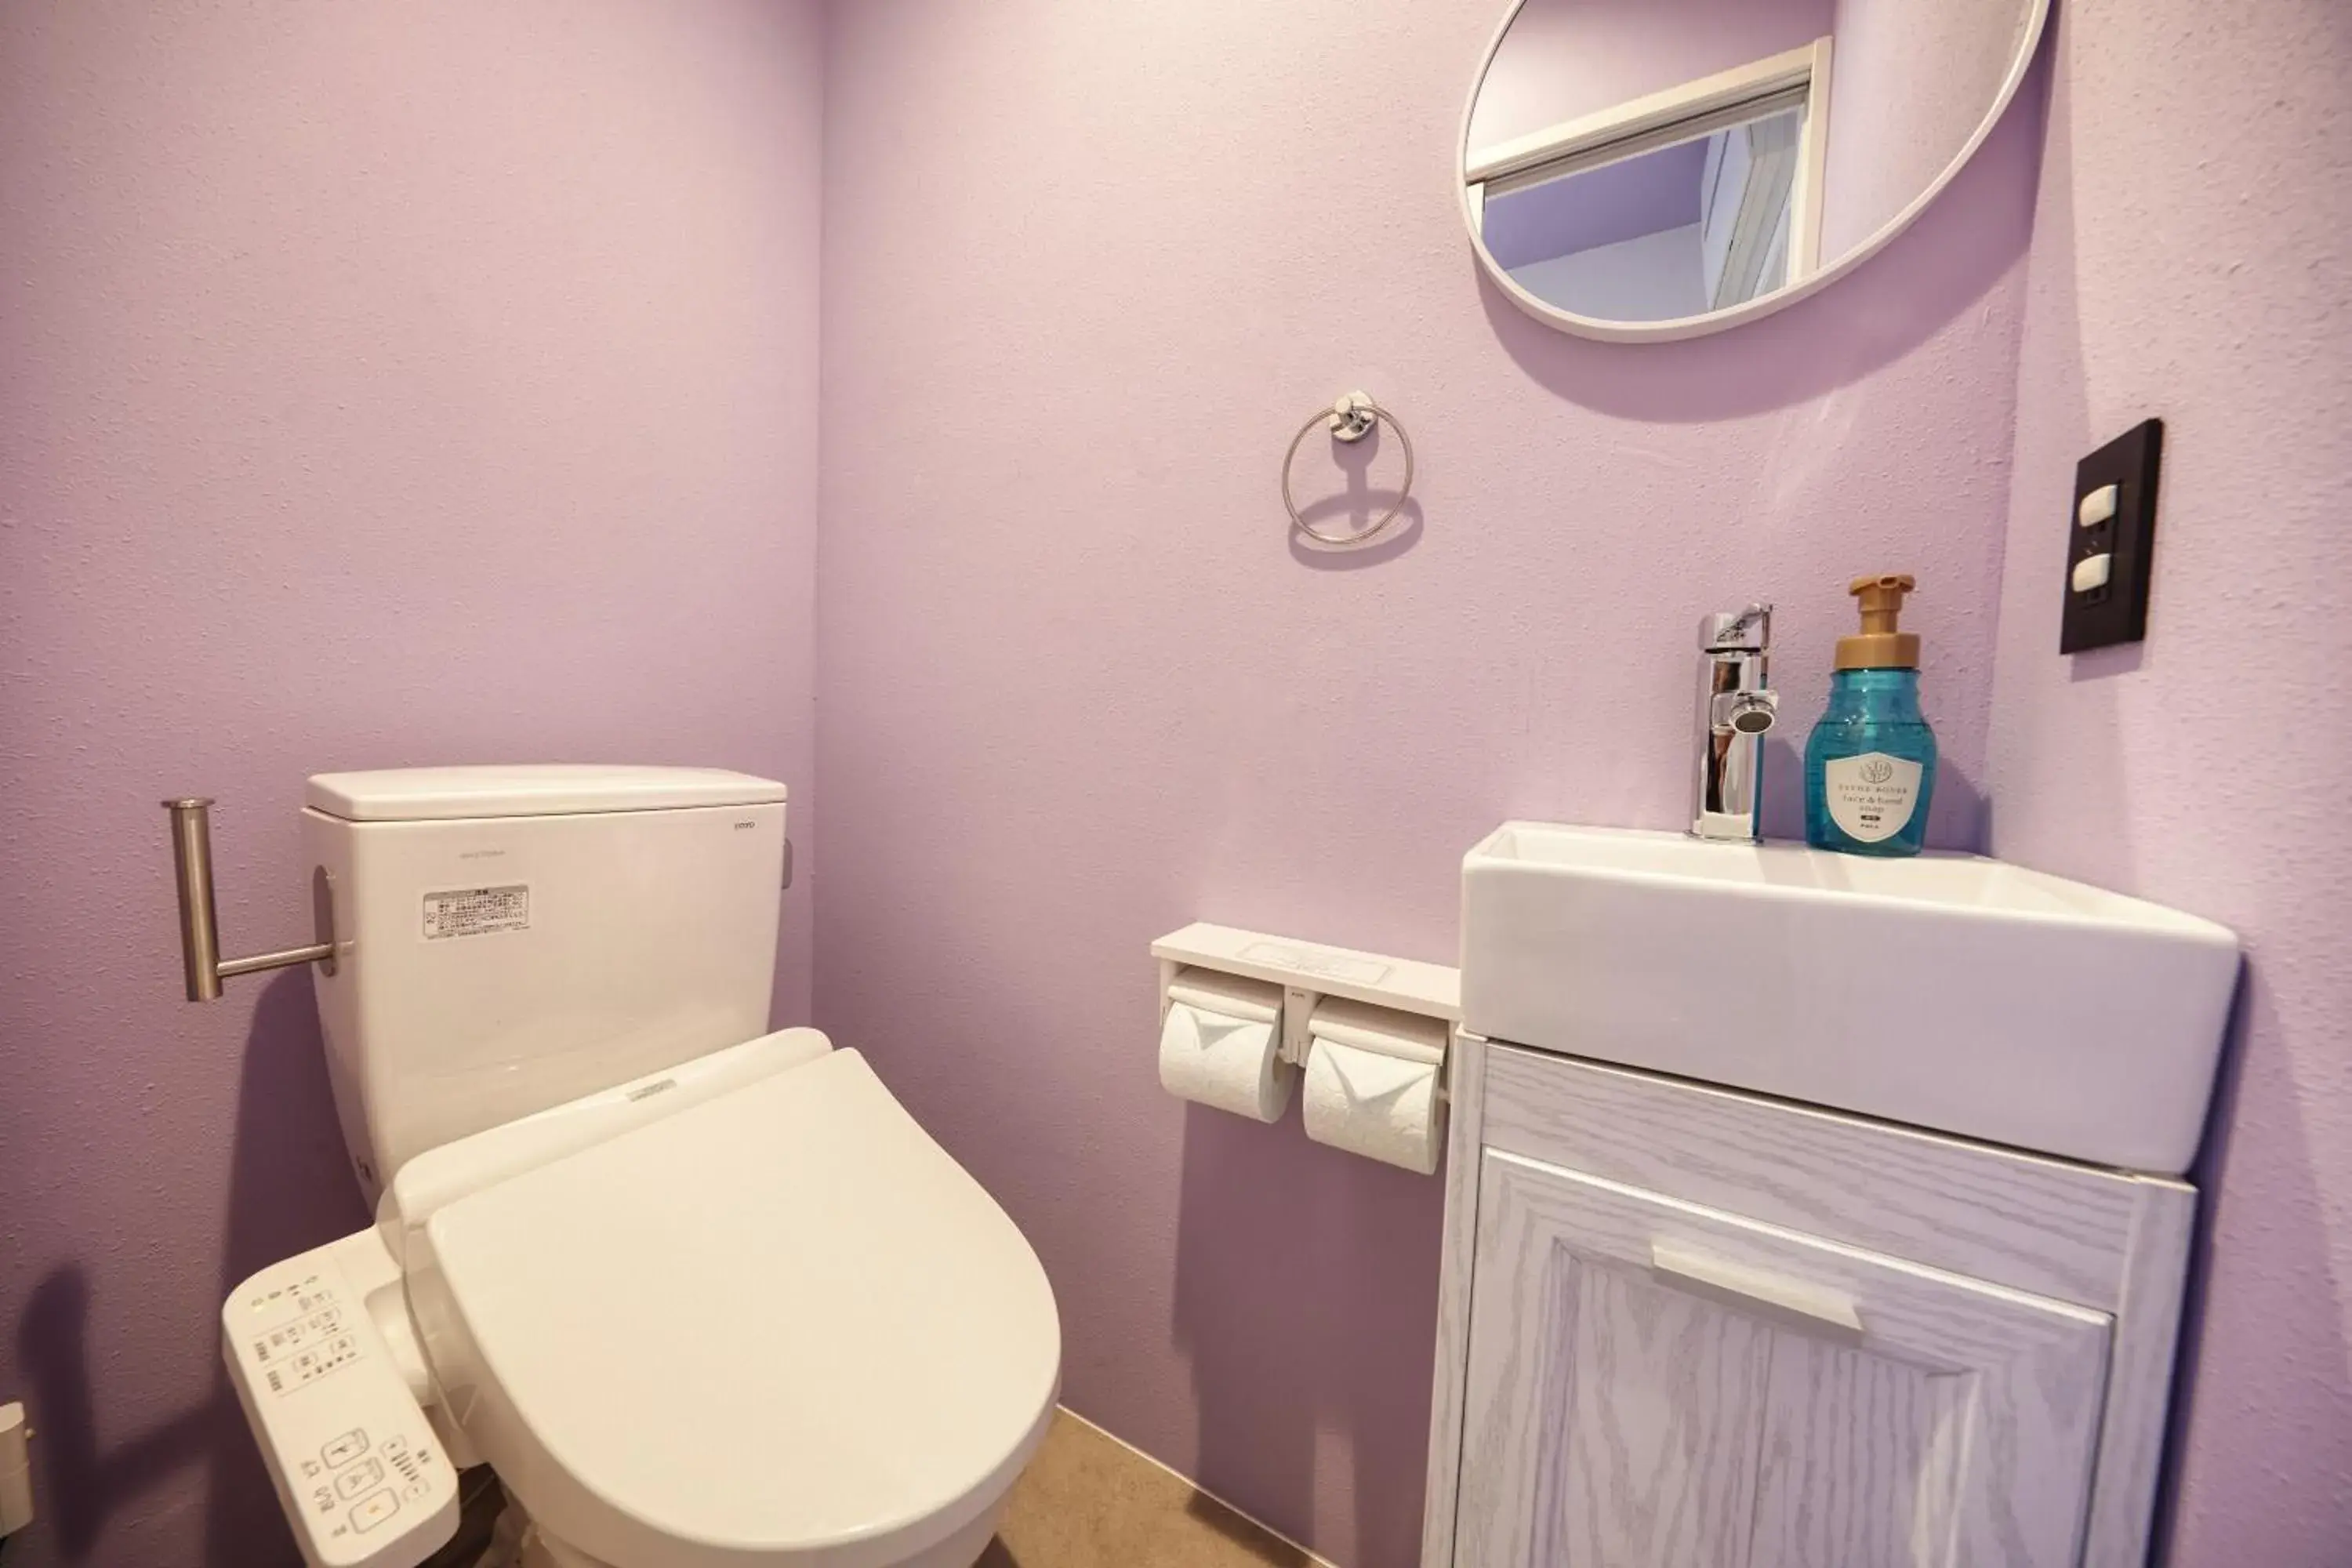 Toilet, Bathroom in Glory island okinawa SOBE